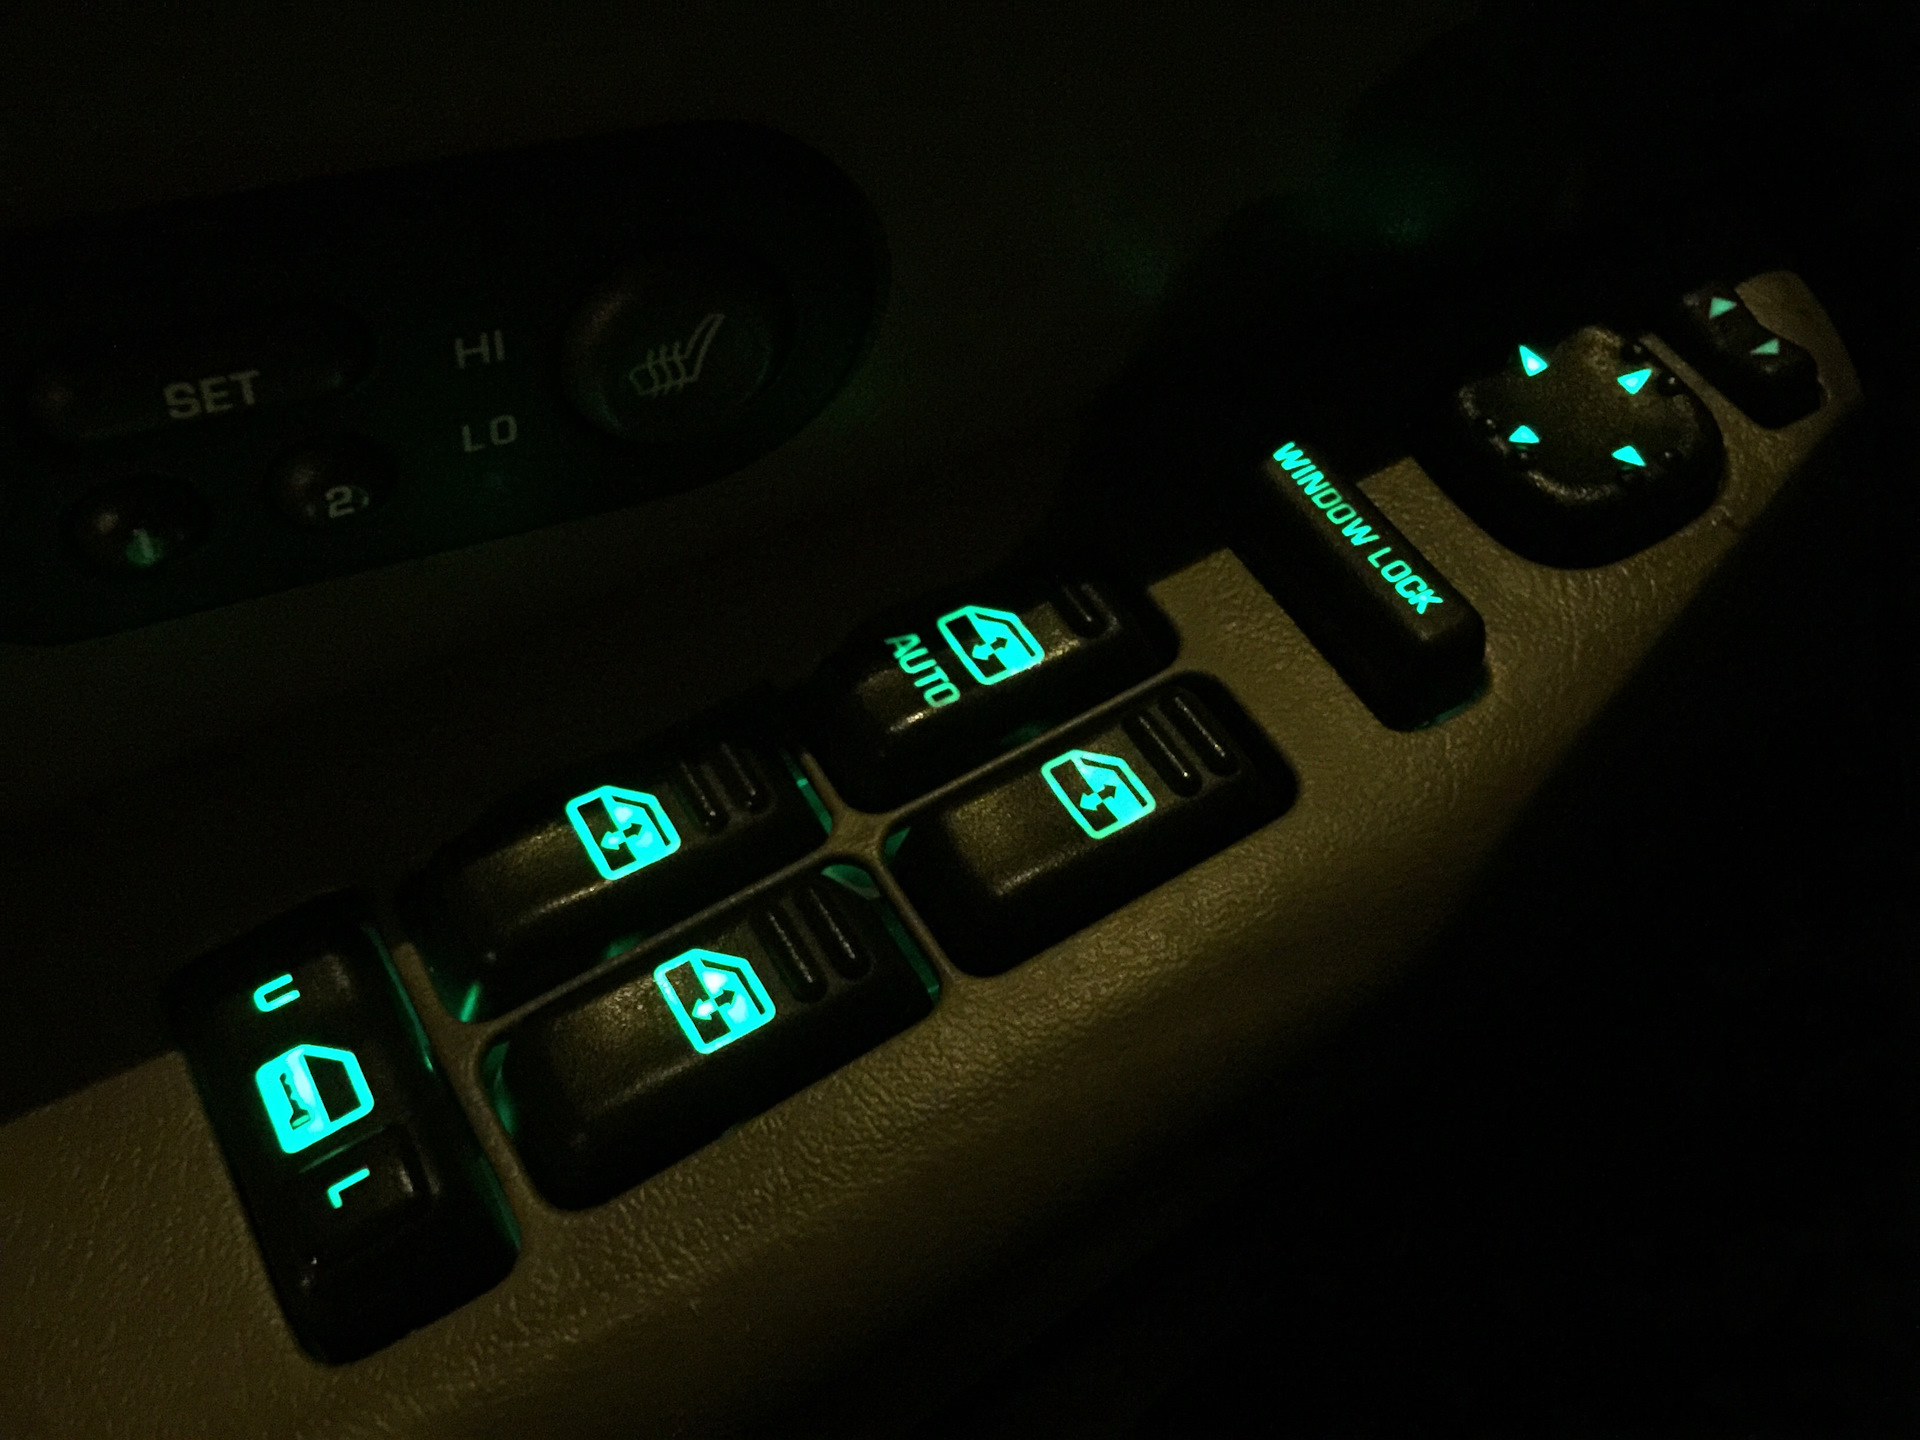 Подсветка кнопок ниссан. Chevrolet Tahoe лампочки подсветки кнопок. Подсветка кнопок стеклоподъемников Space Wagon 2. Подсветка кнопок Патриот-01. Шевроле Леганза подсветка кнопок.